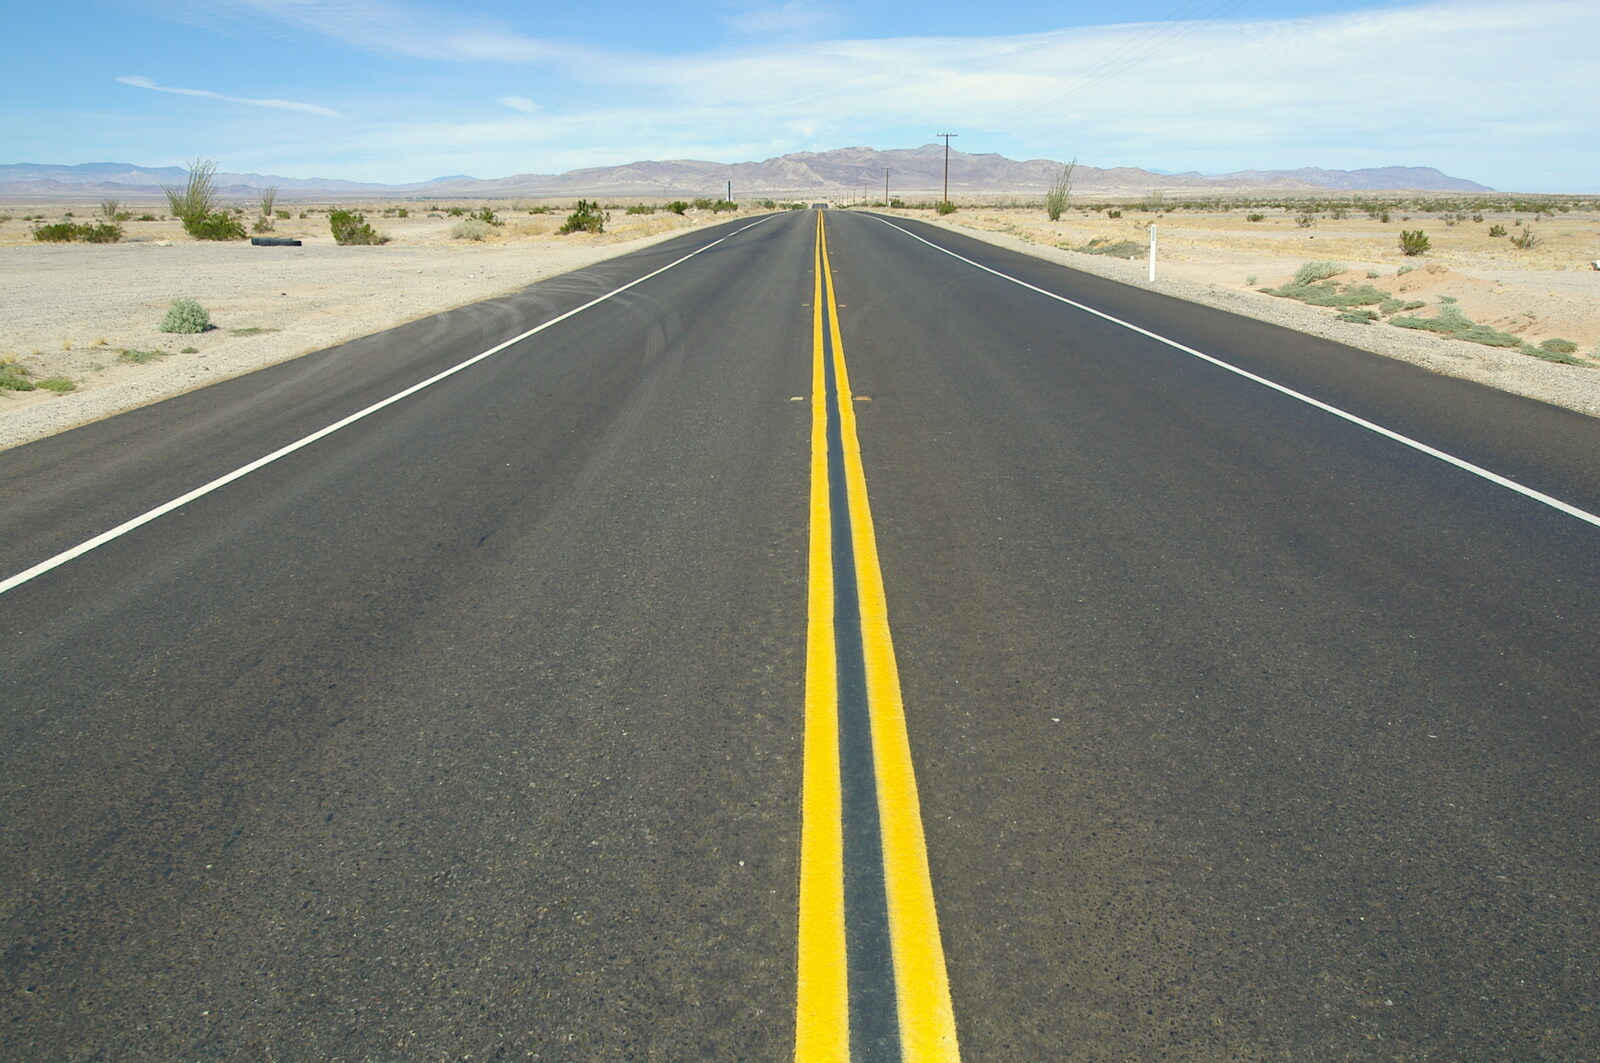 Vanishing-point road from California Desert: El Centro, Imperial Valley, California, US - 24th September 2005